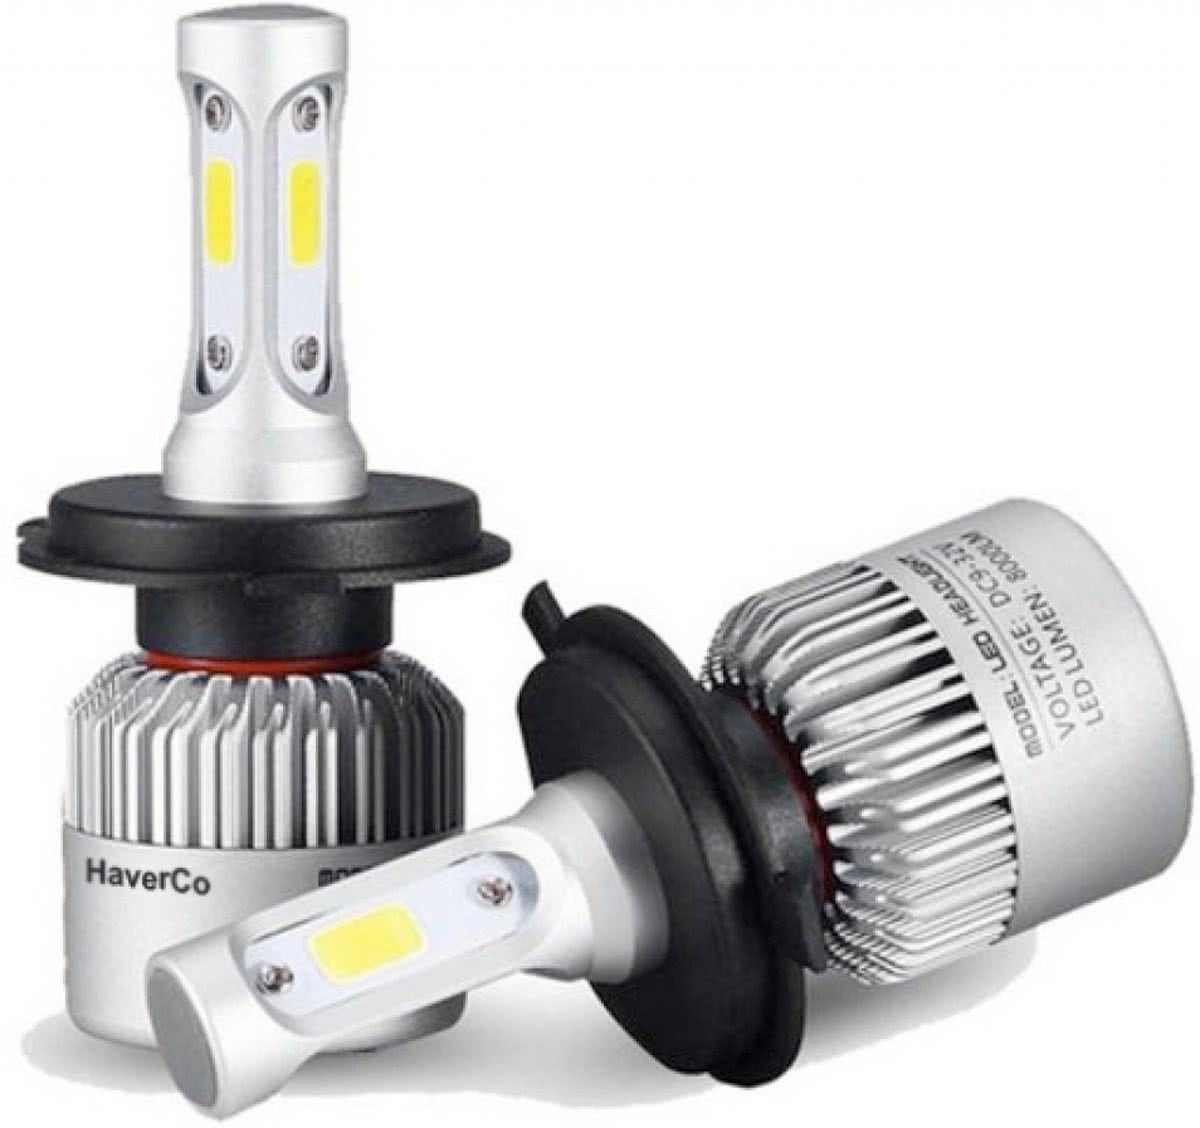 HaverCo LED koplampen set / H4 fitting / Waterproof / 36W 4000 lumen per lamp 8000 totaal